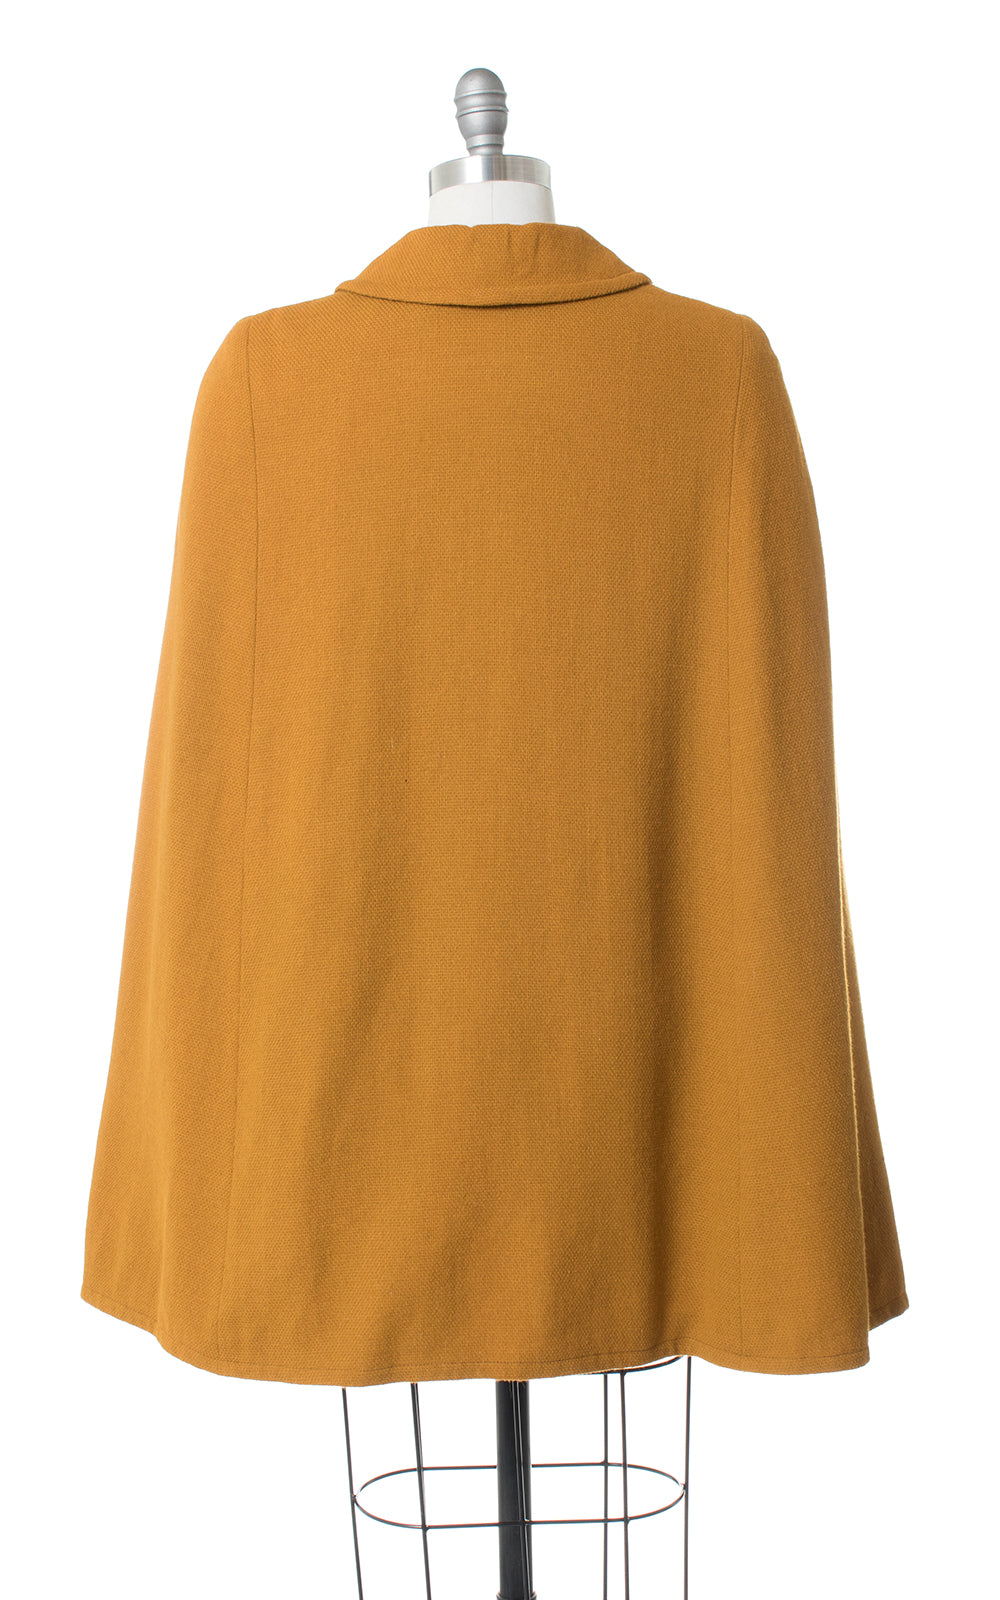 1960s Mustard Yellow Wool Cape